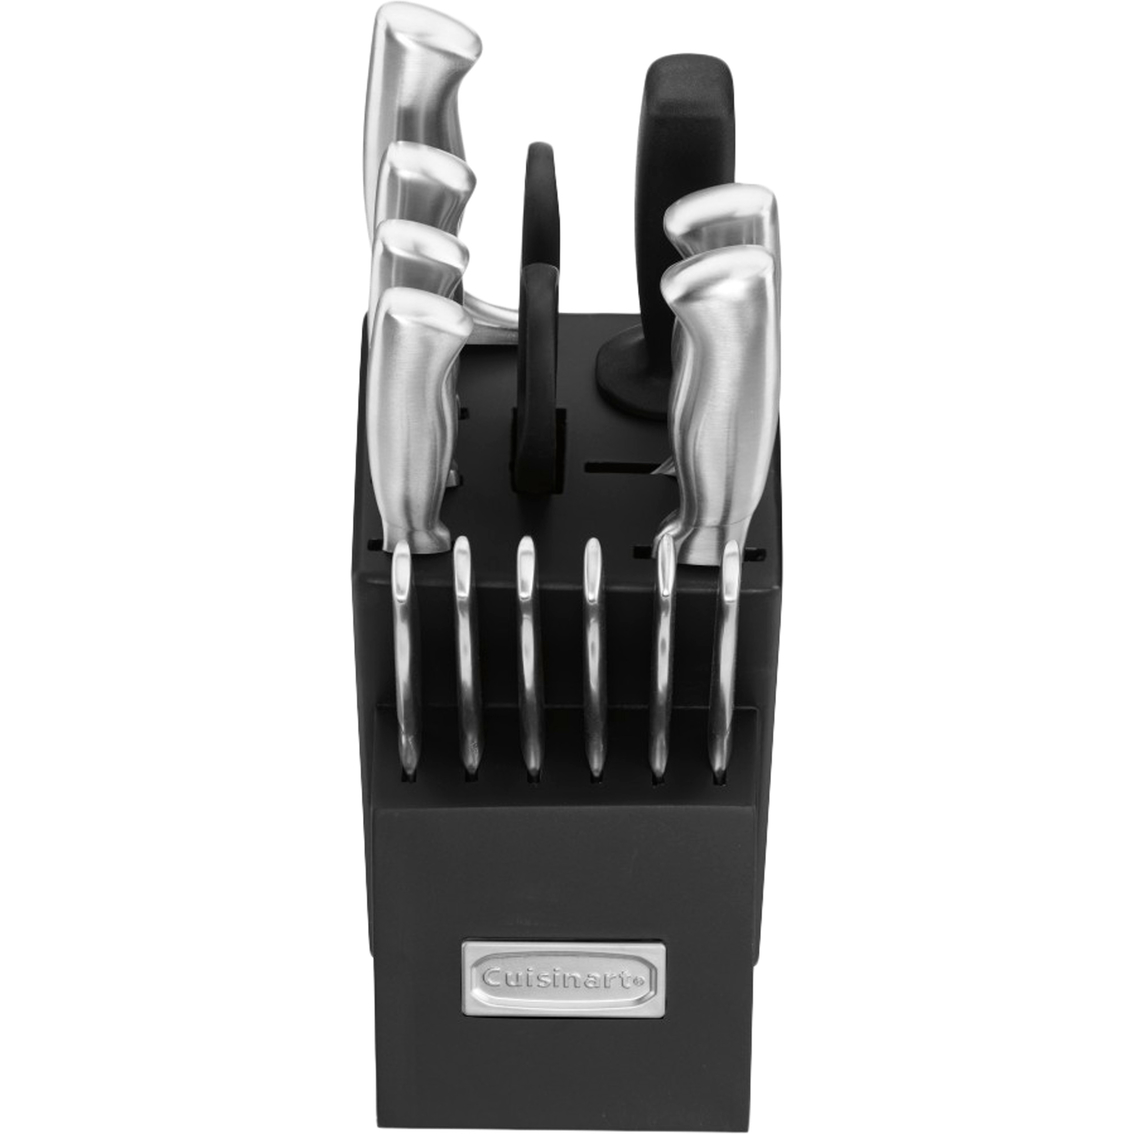 Cuisinart German Stainless Steel Hollow Handle Knife Block, Set of 15